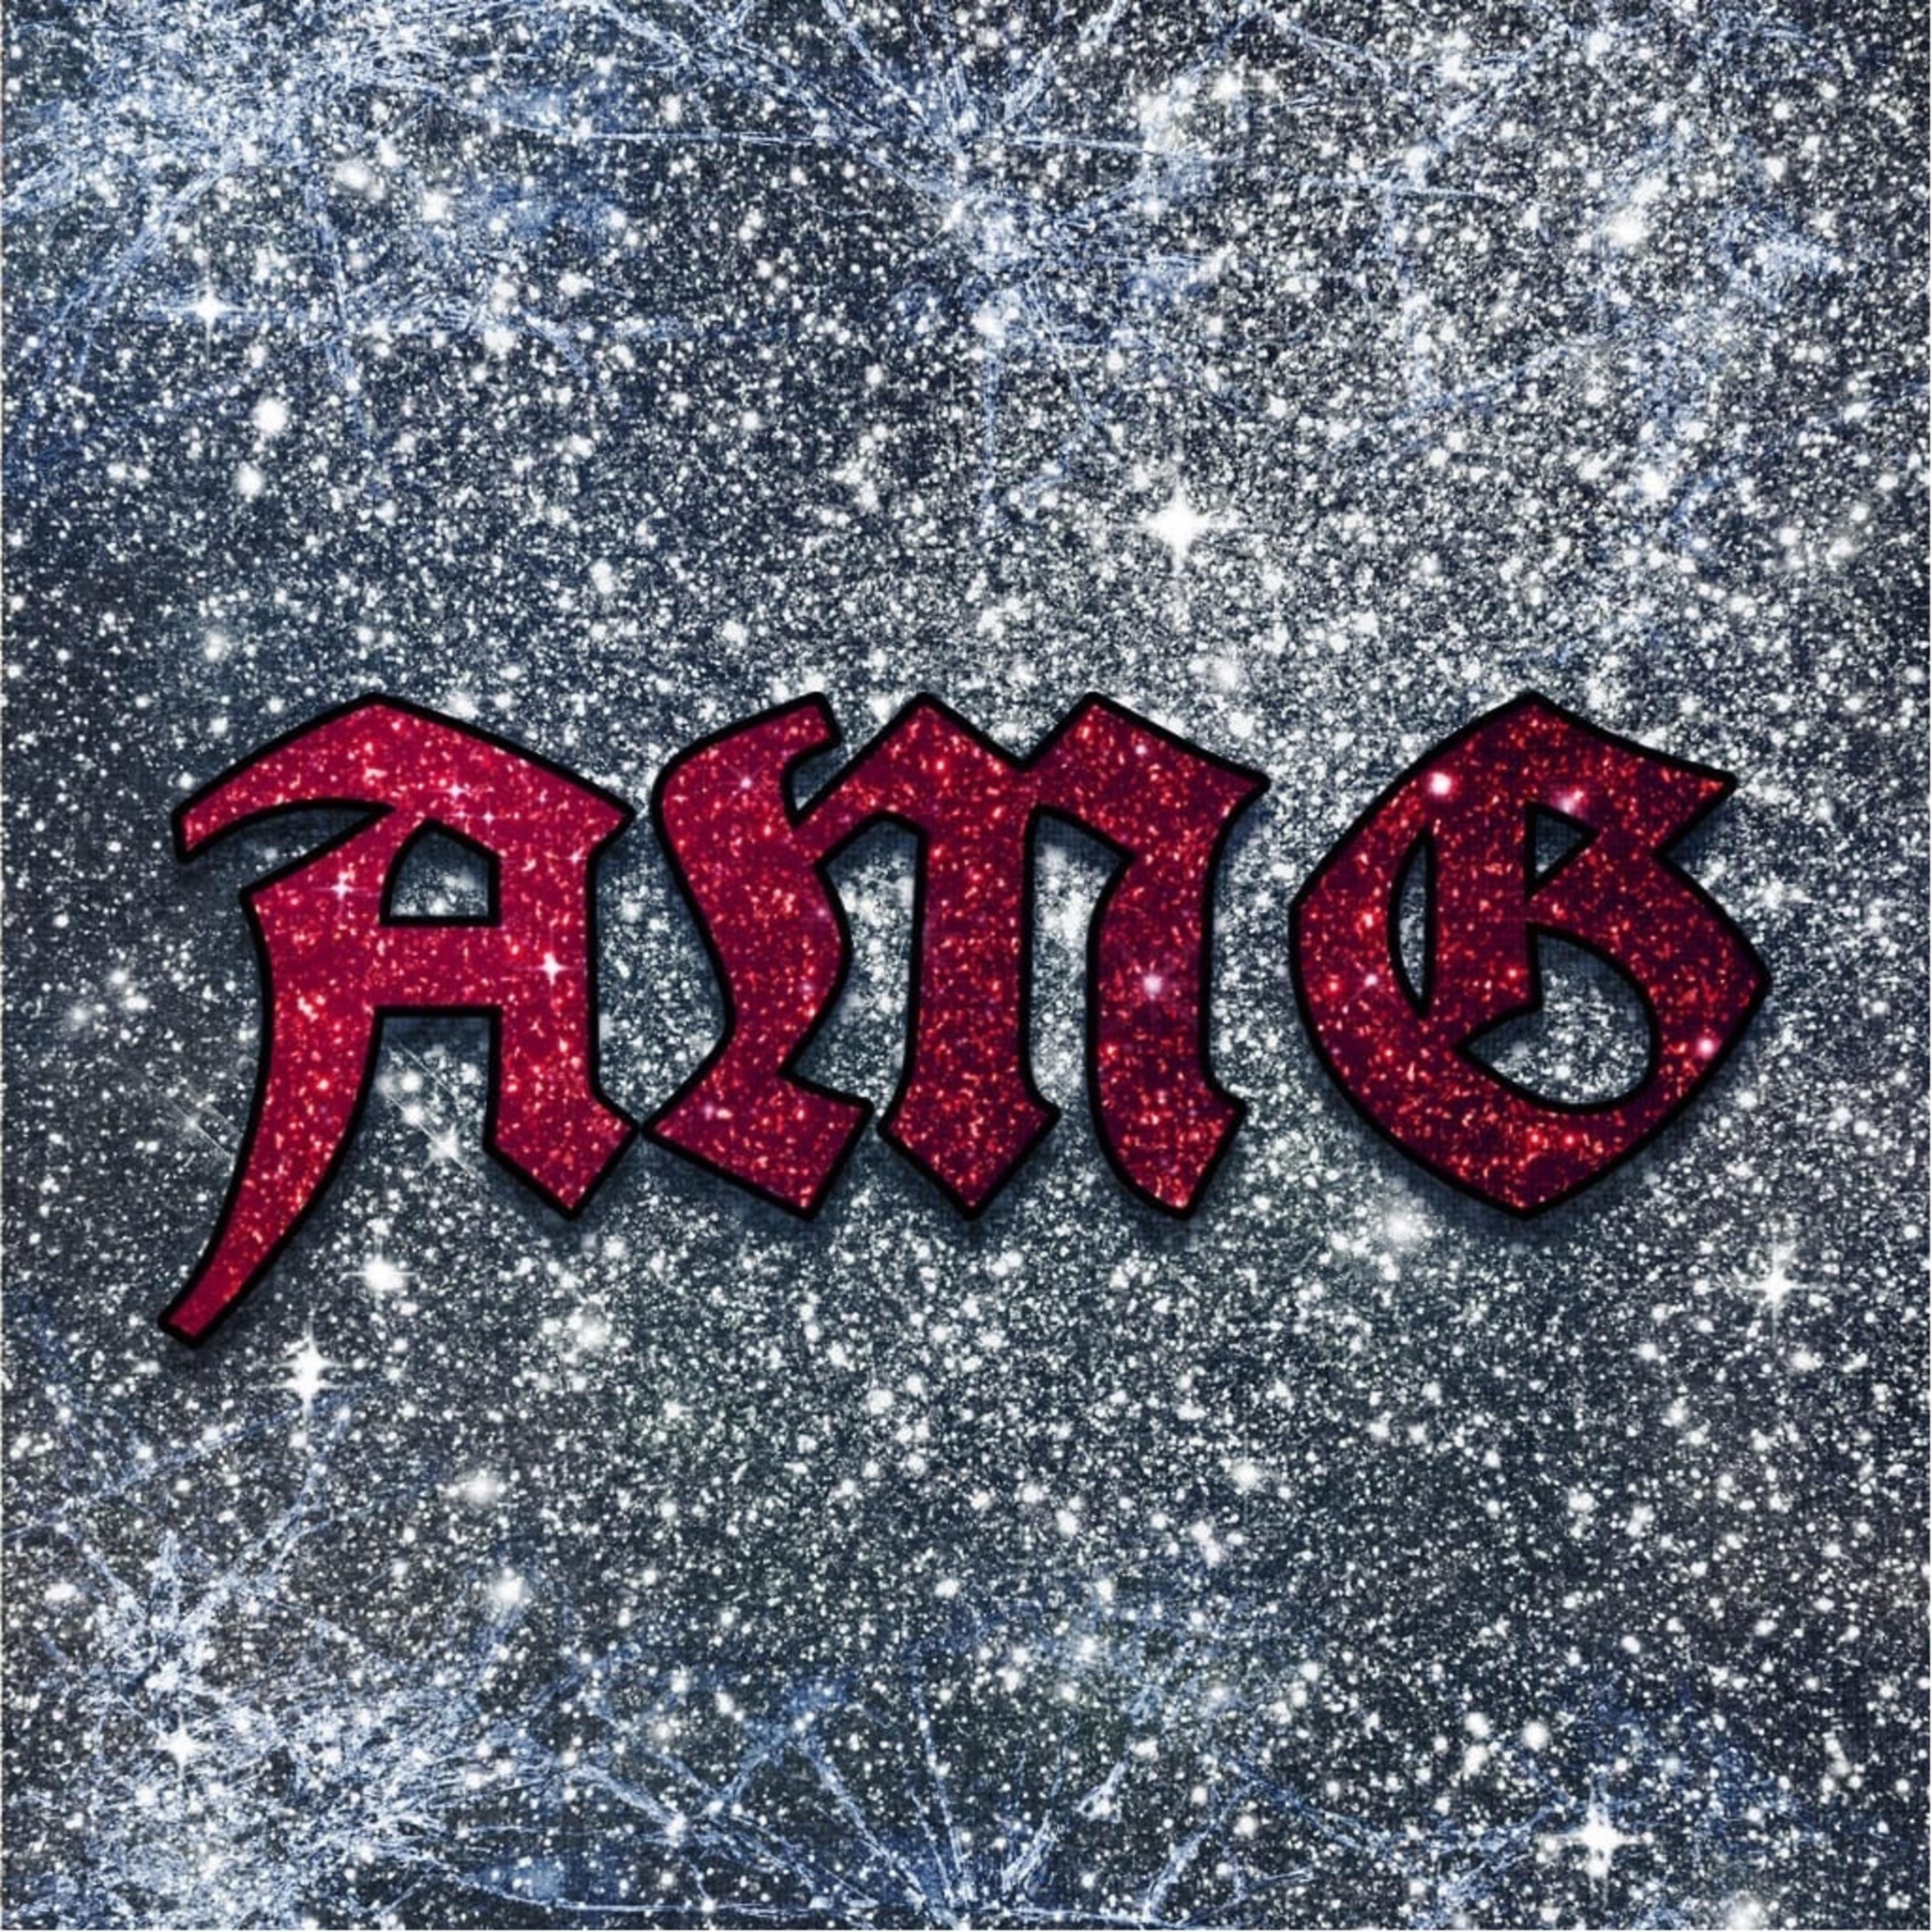 Постер альбома AMG